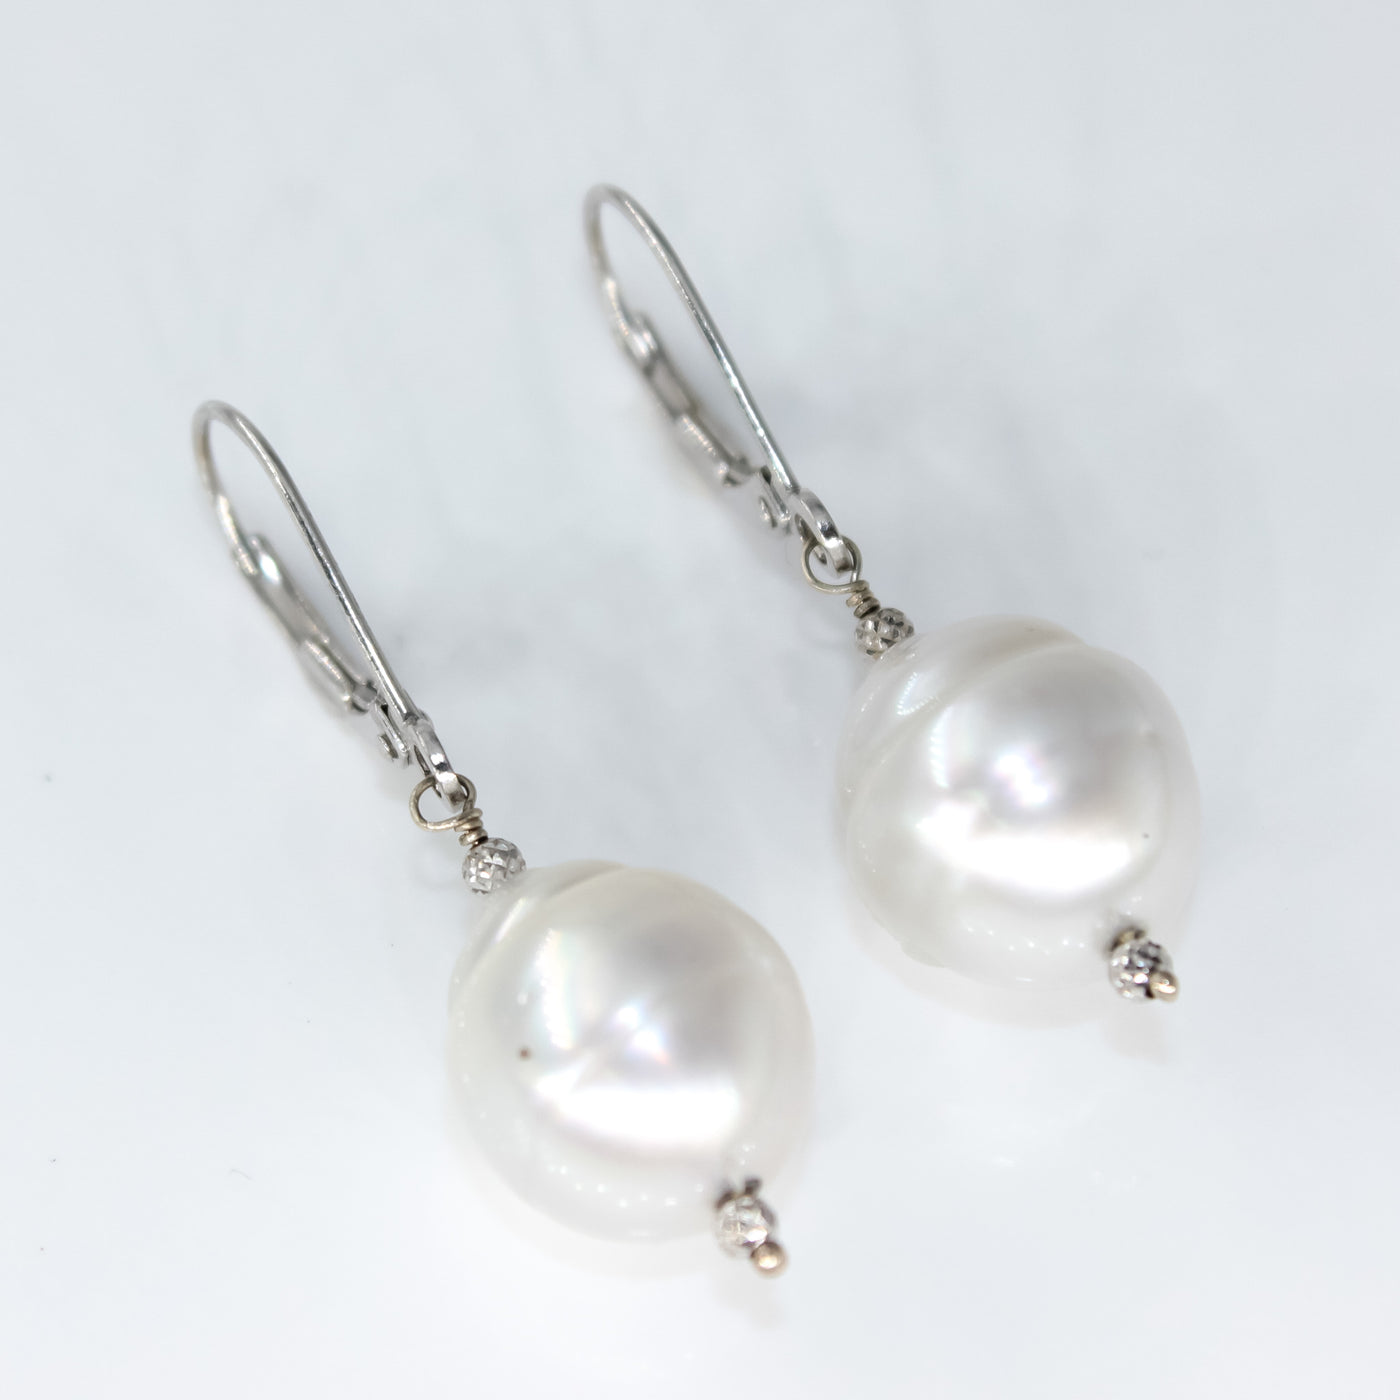 Baroque South Sea Pearl Earrings - 14K White Gold Lever Backs